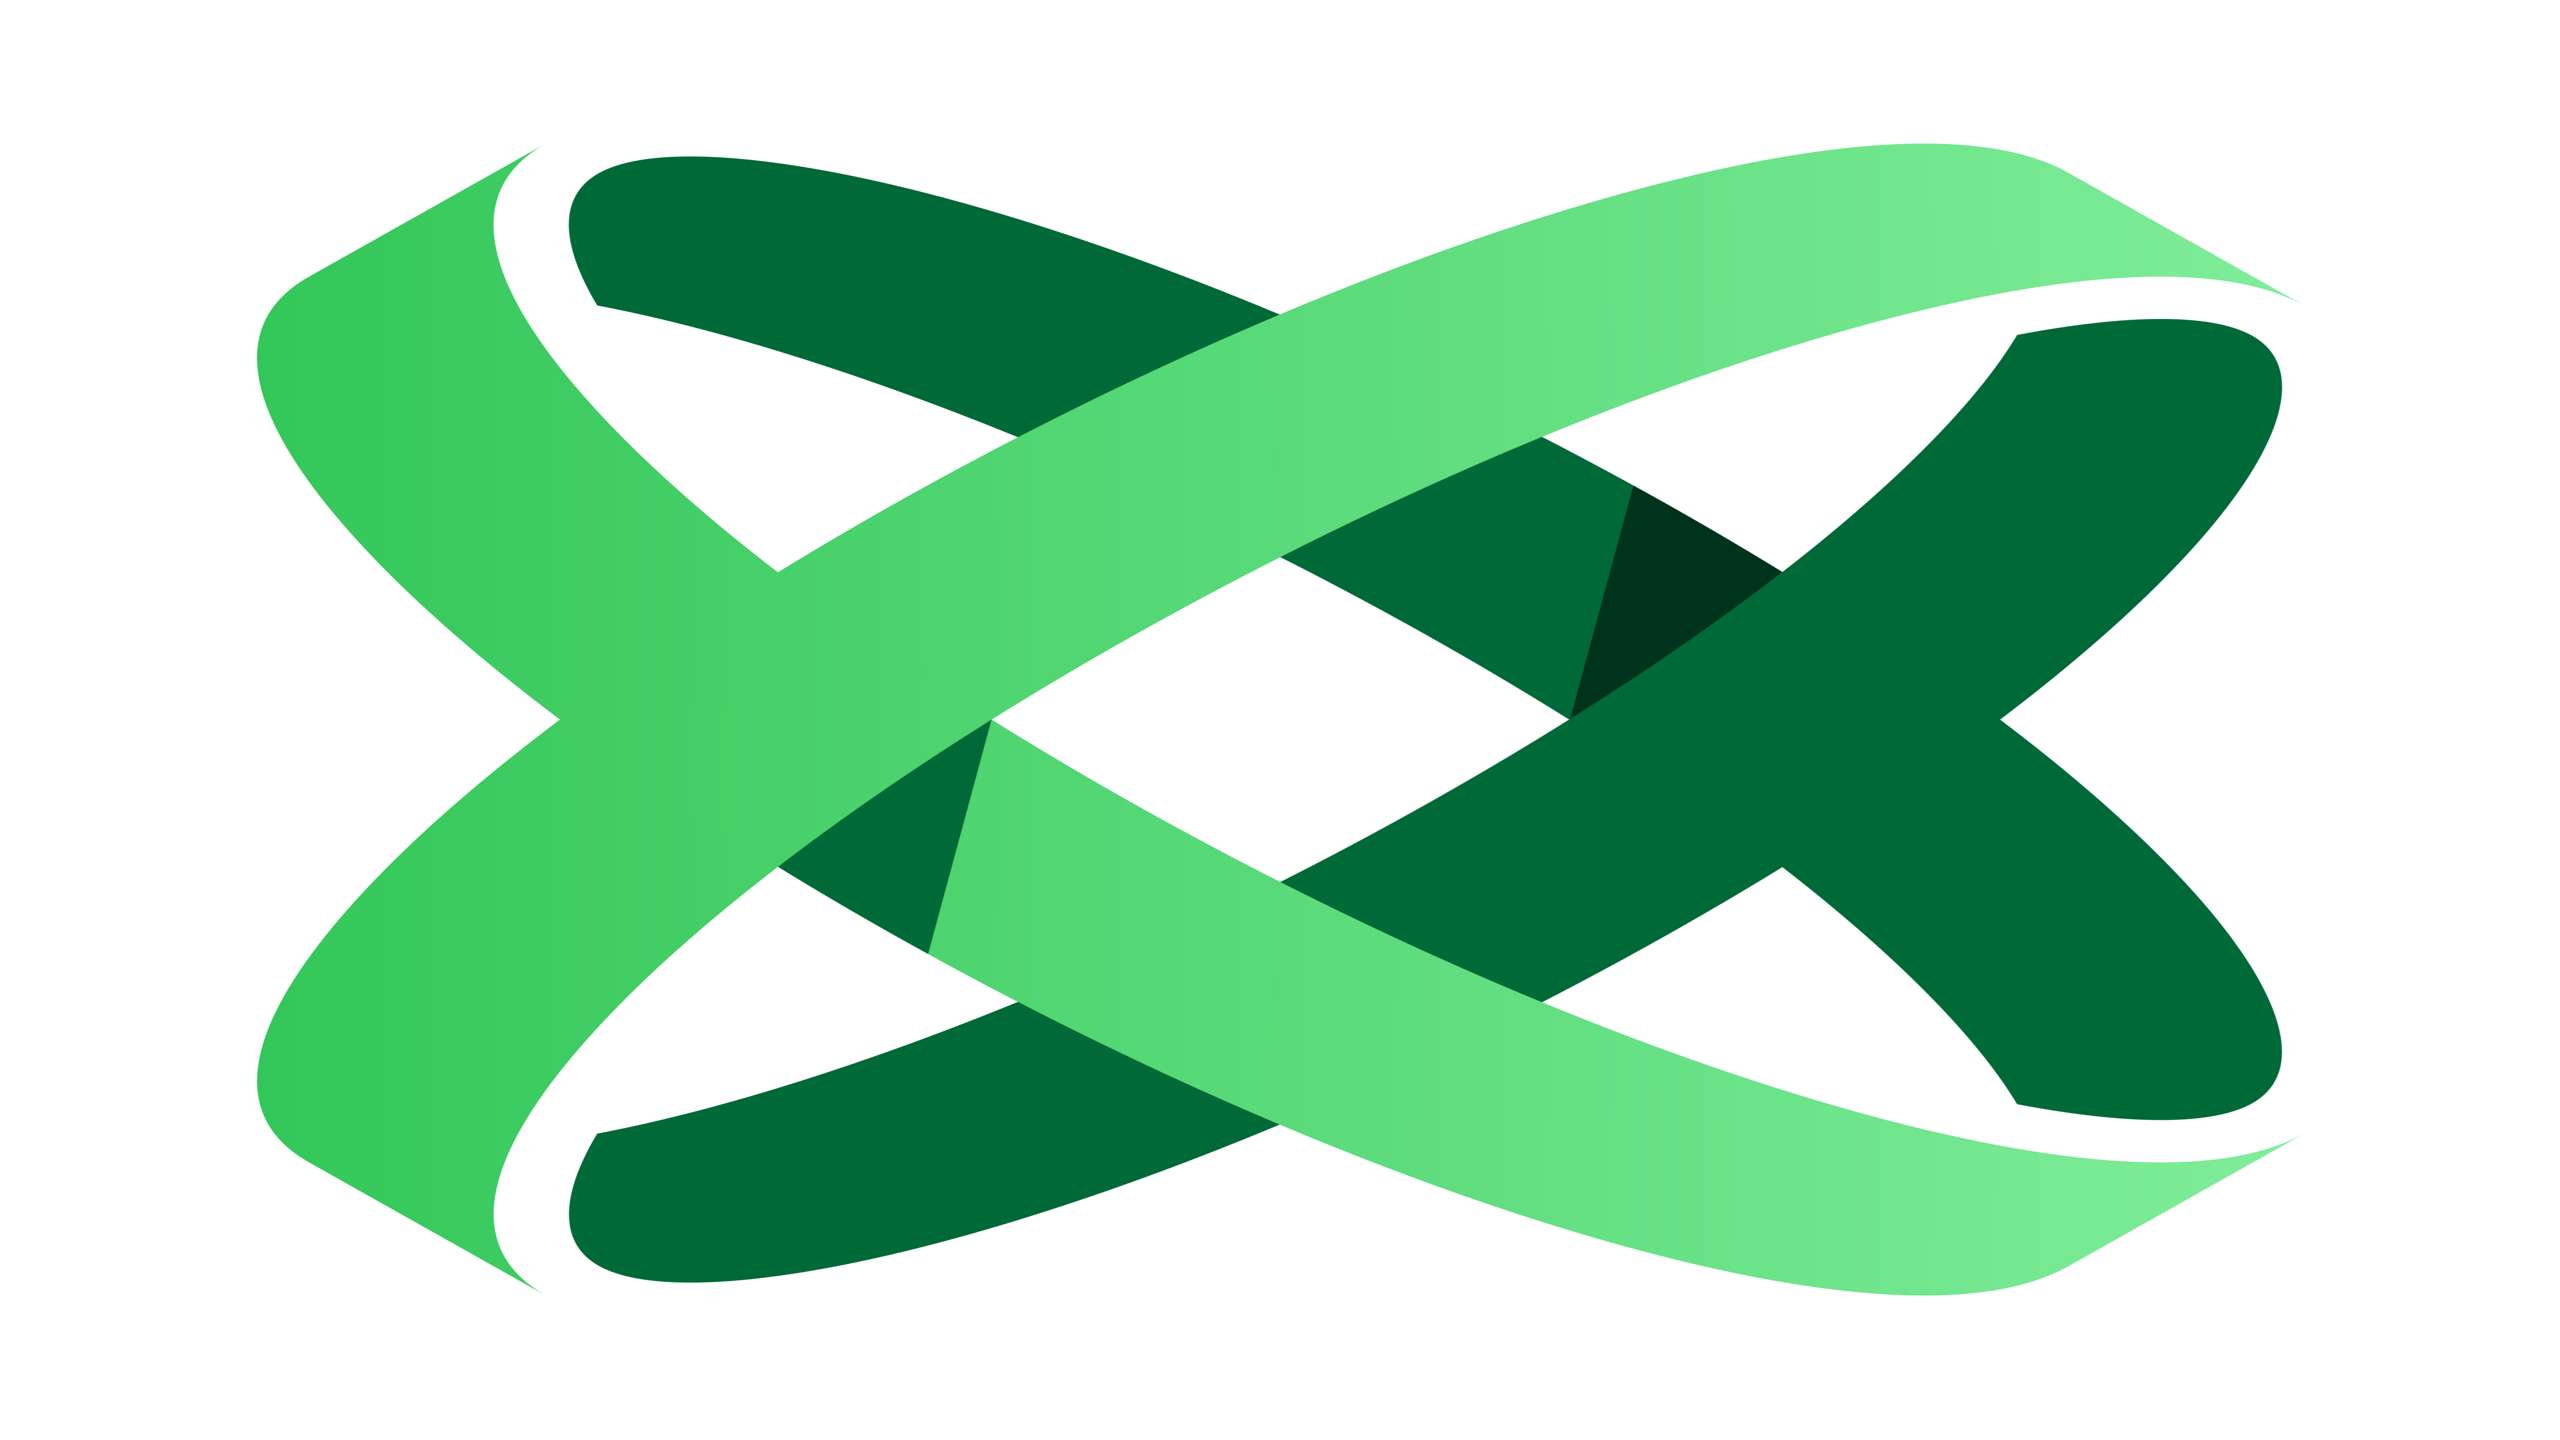 BitX Capital Logo